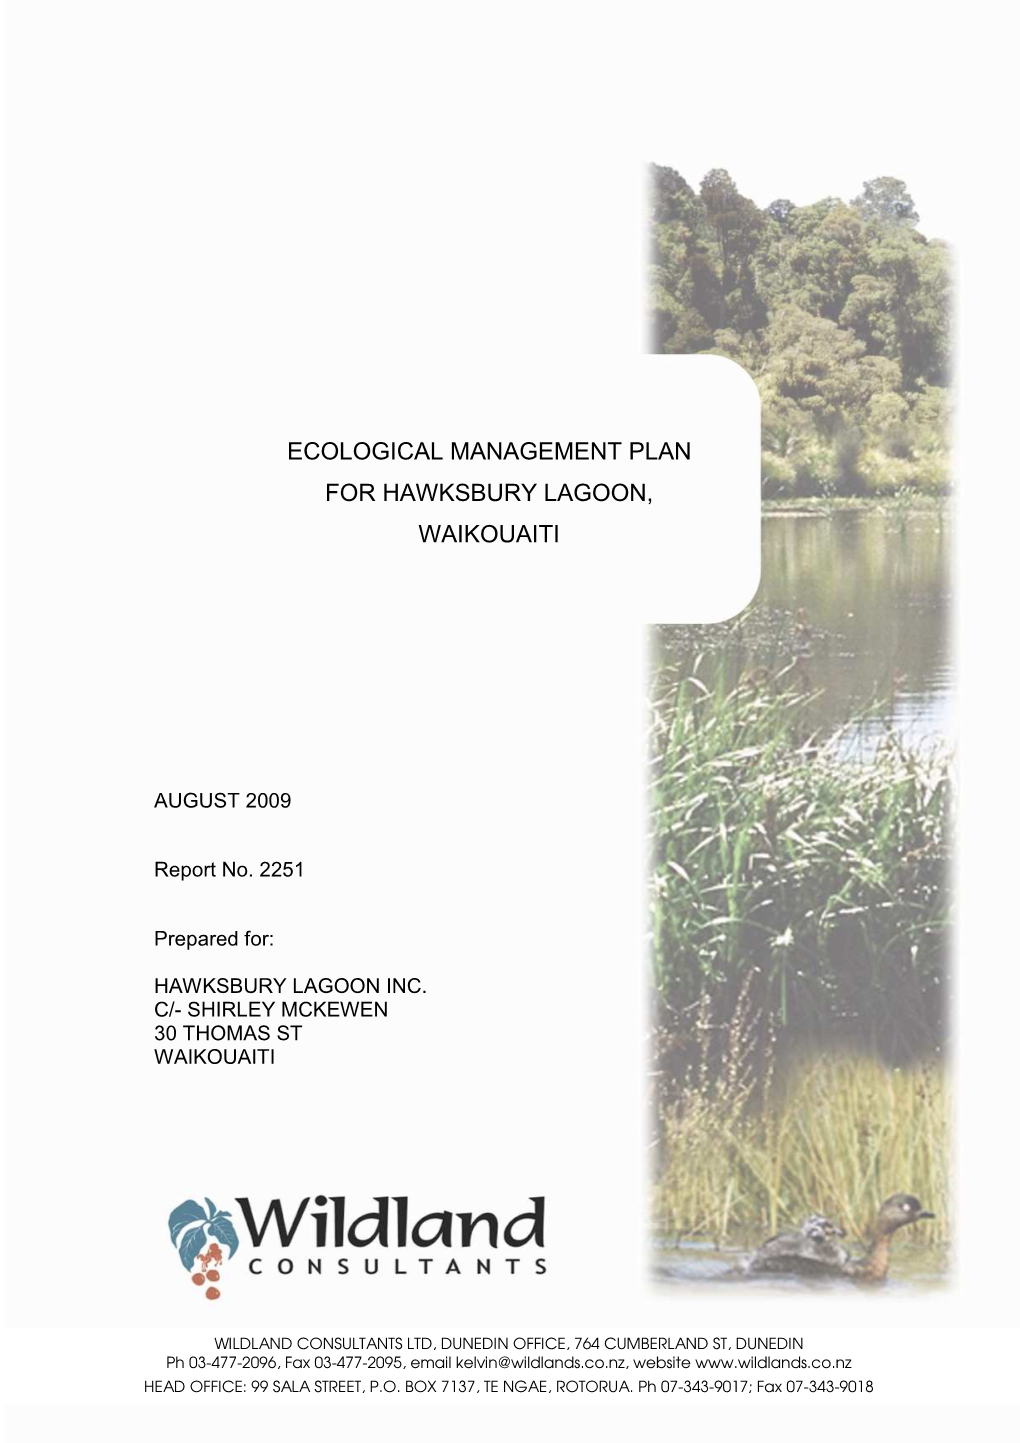 Ecological Management Plan for Hawksbury Lagoon, Waikouaiti